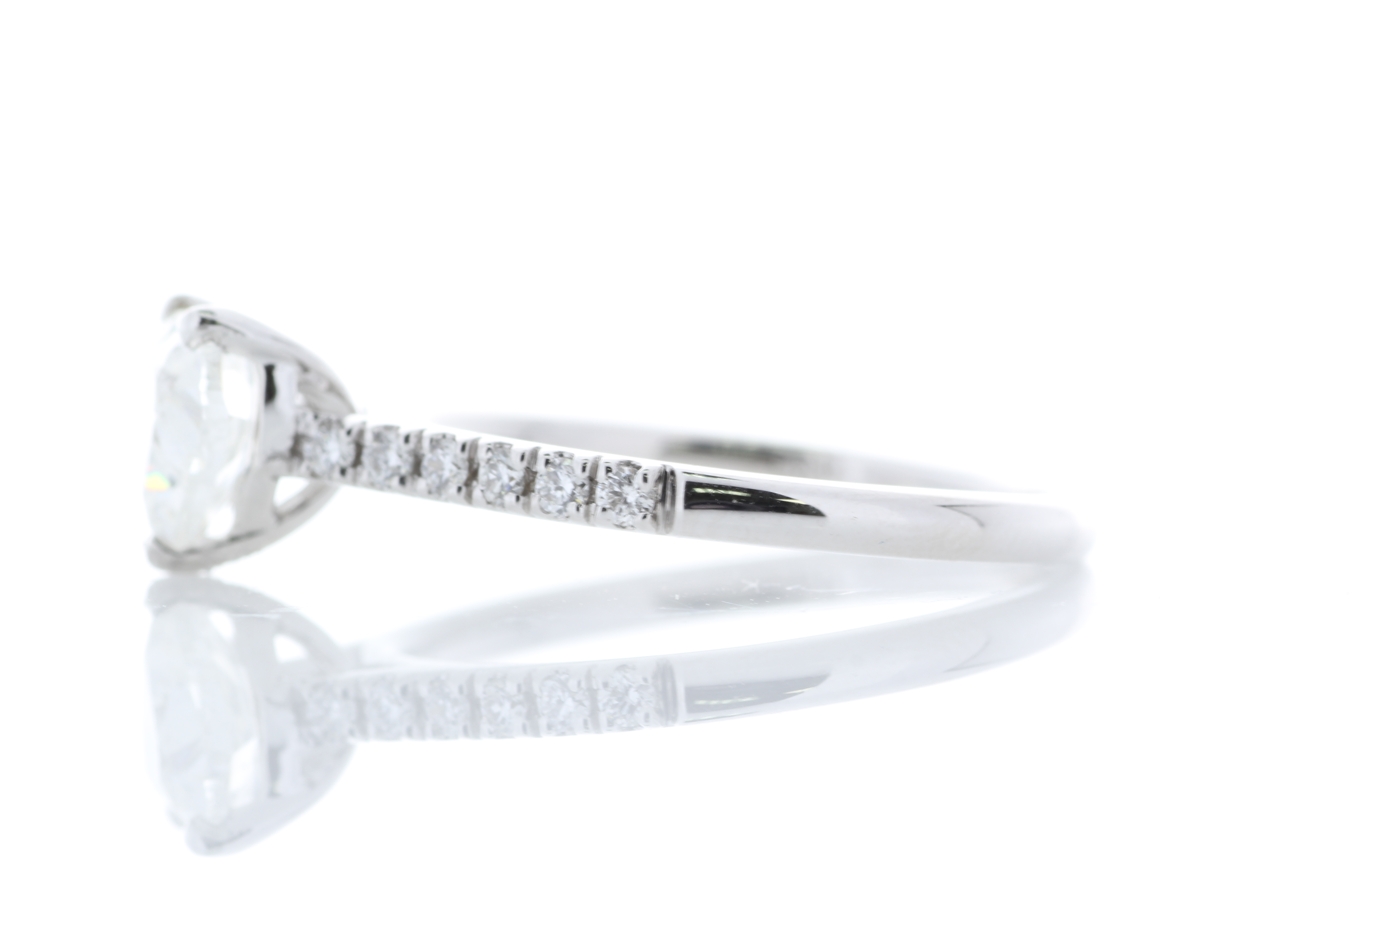 18ct White Gold Heart Shape Diamond Ring 1.17 Carats - Image 2 of 5